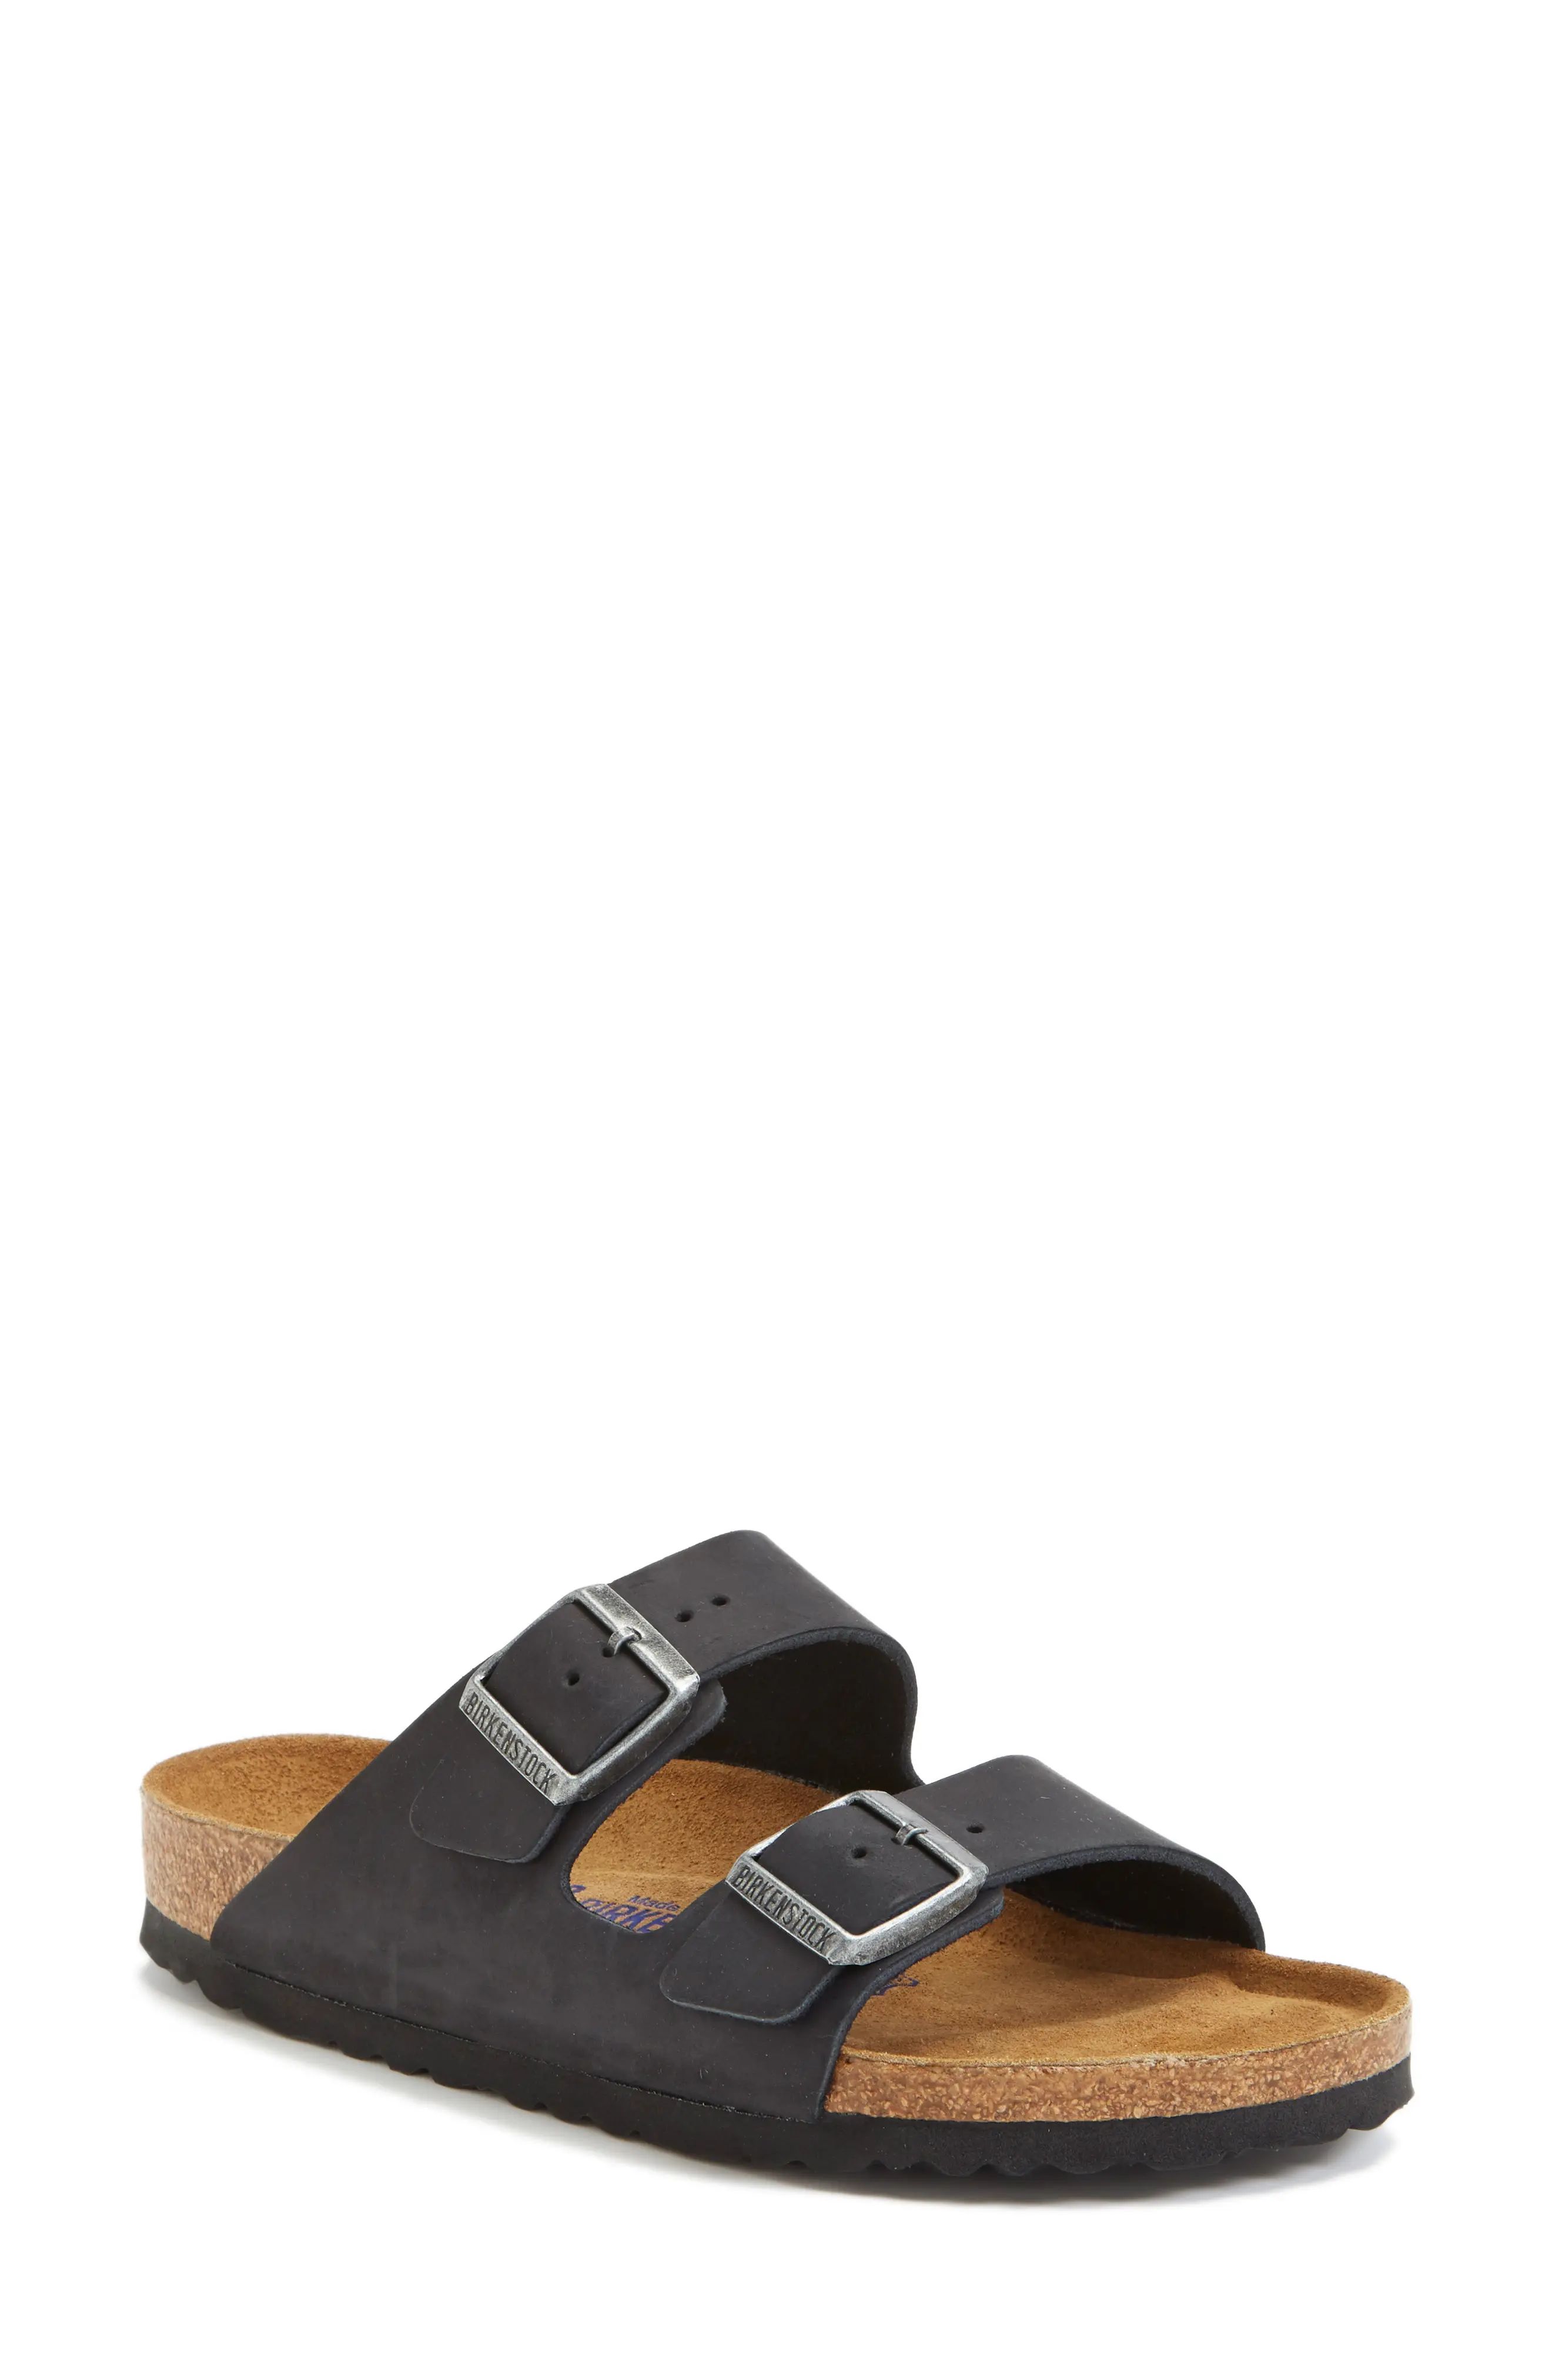 Women's Birkenstock Arizona Soft Footbed Sandal, Size 10-10.5US - Black | Nordstrom